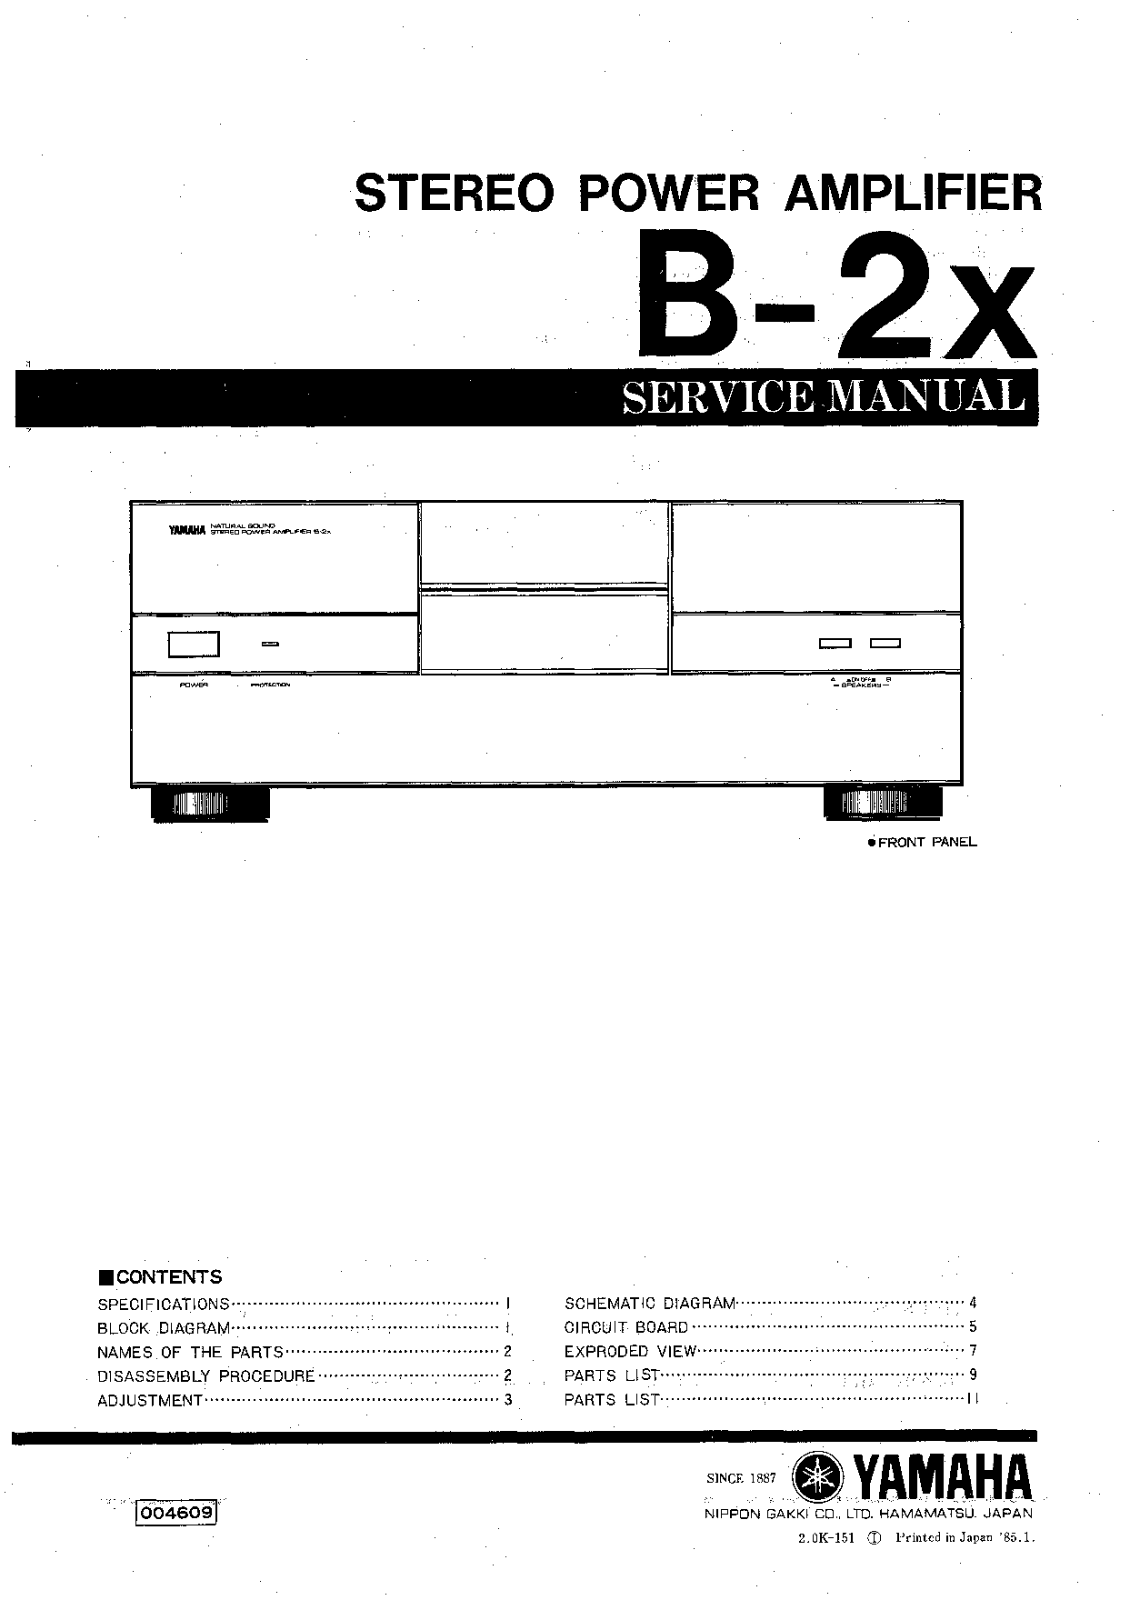 Yamaha B-2-X Service Manual